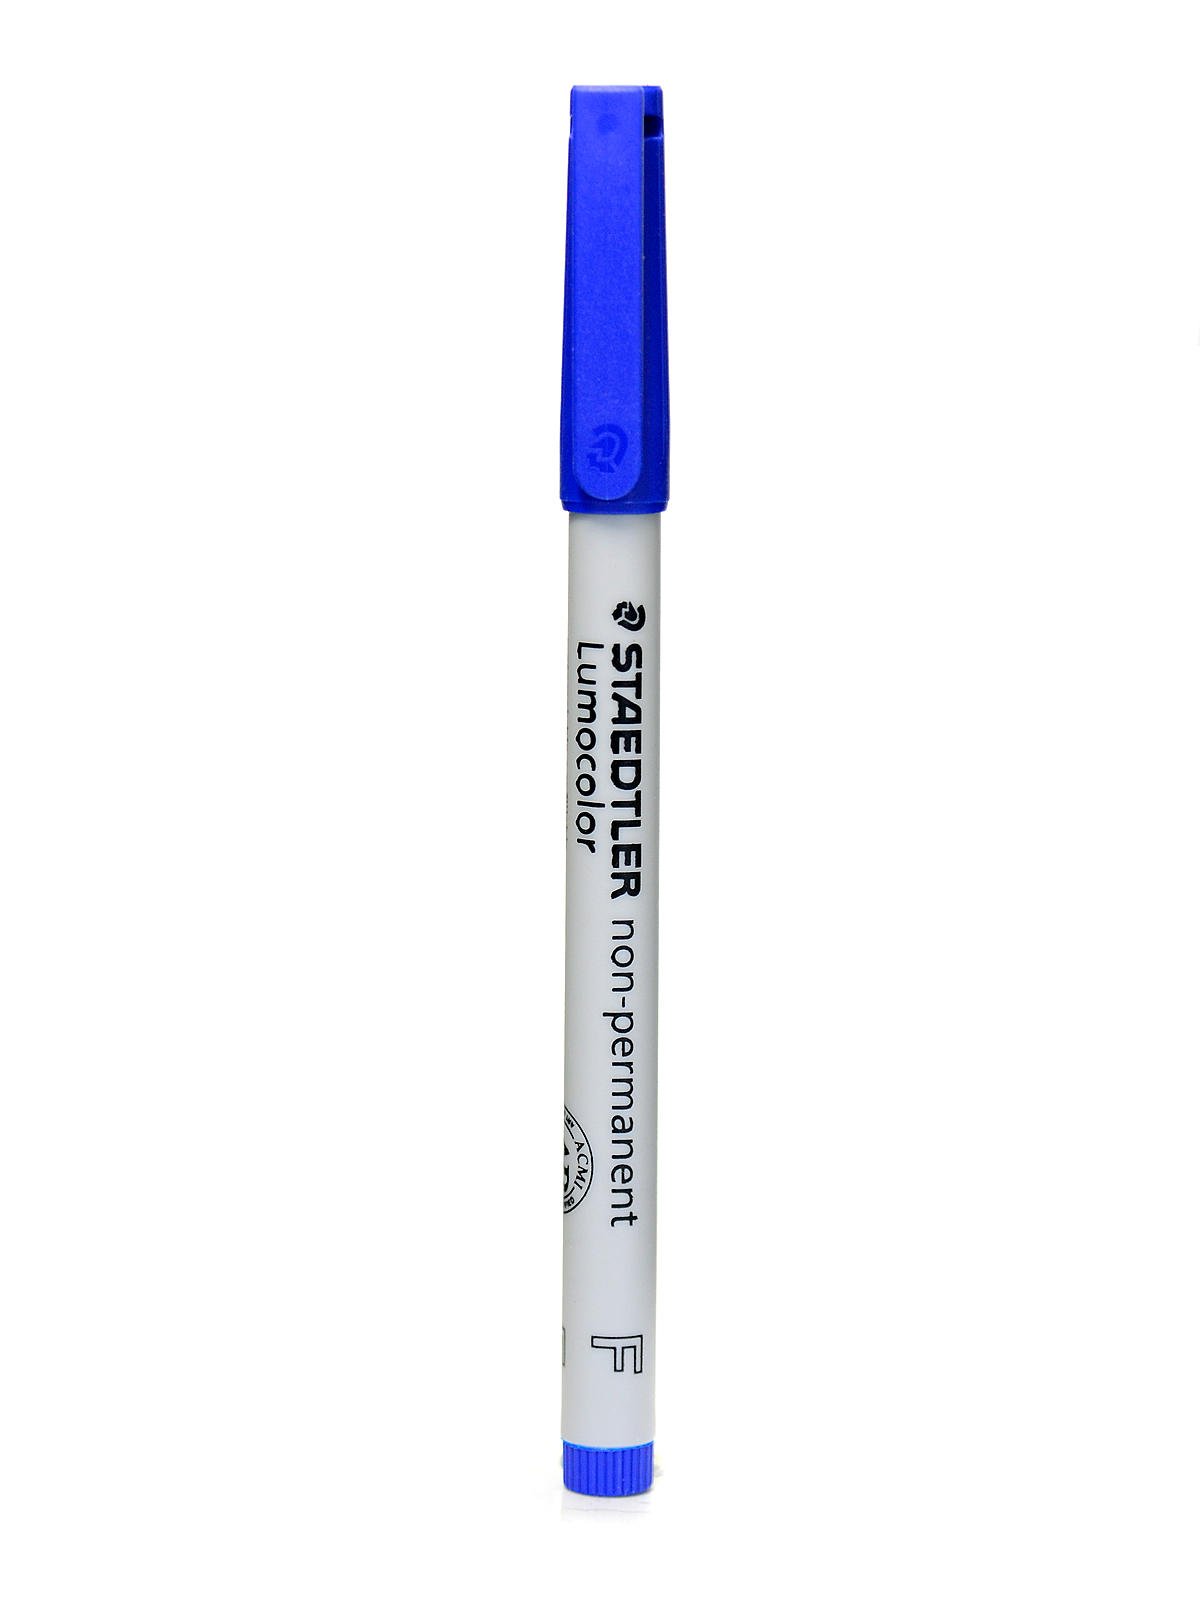 Lumocolor Non-Permanent Overhead Projection Markers blue, medium